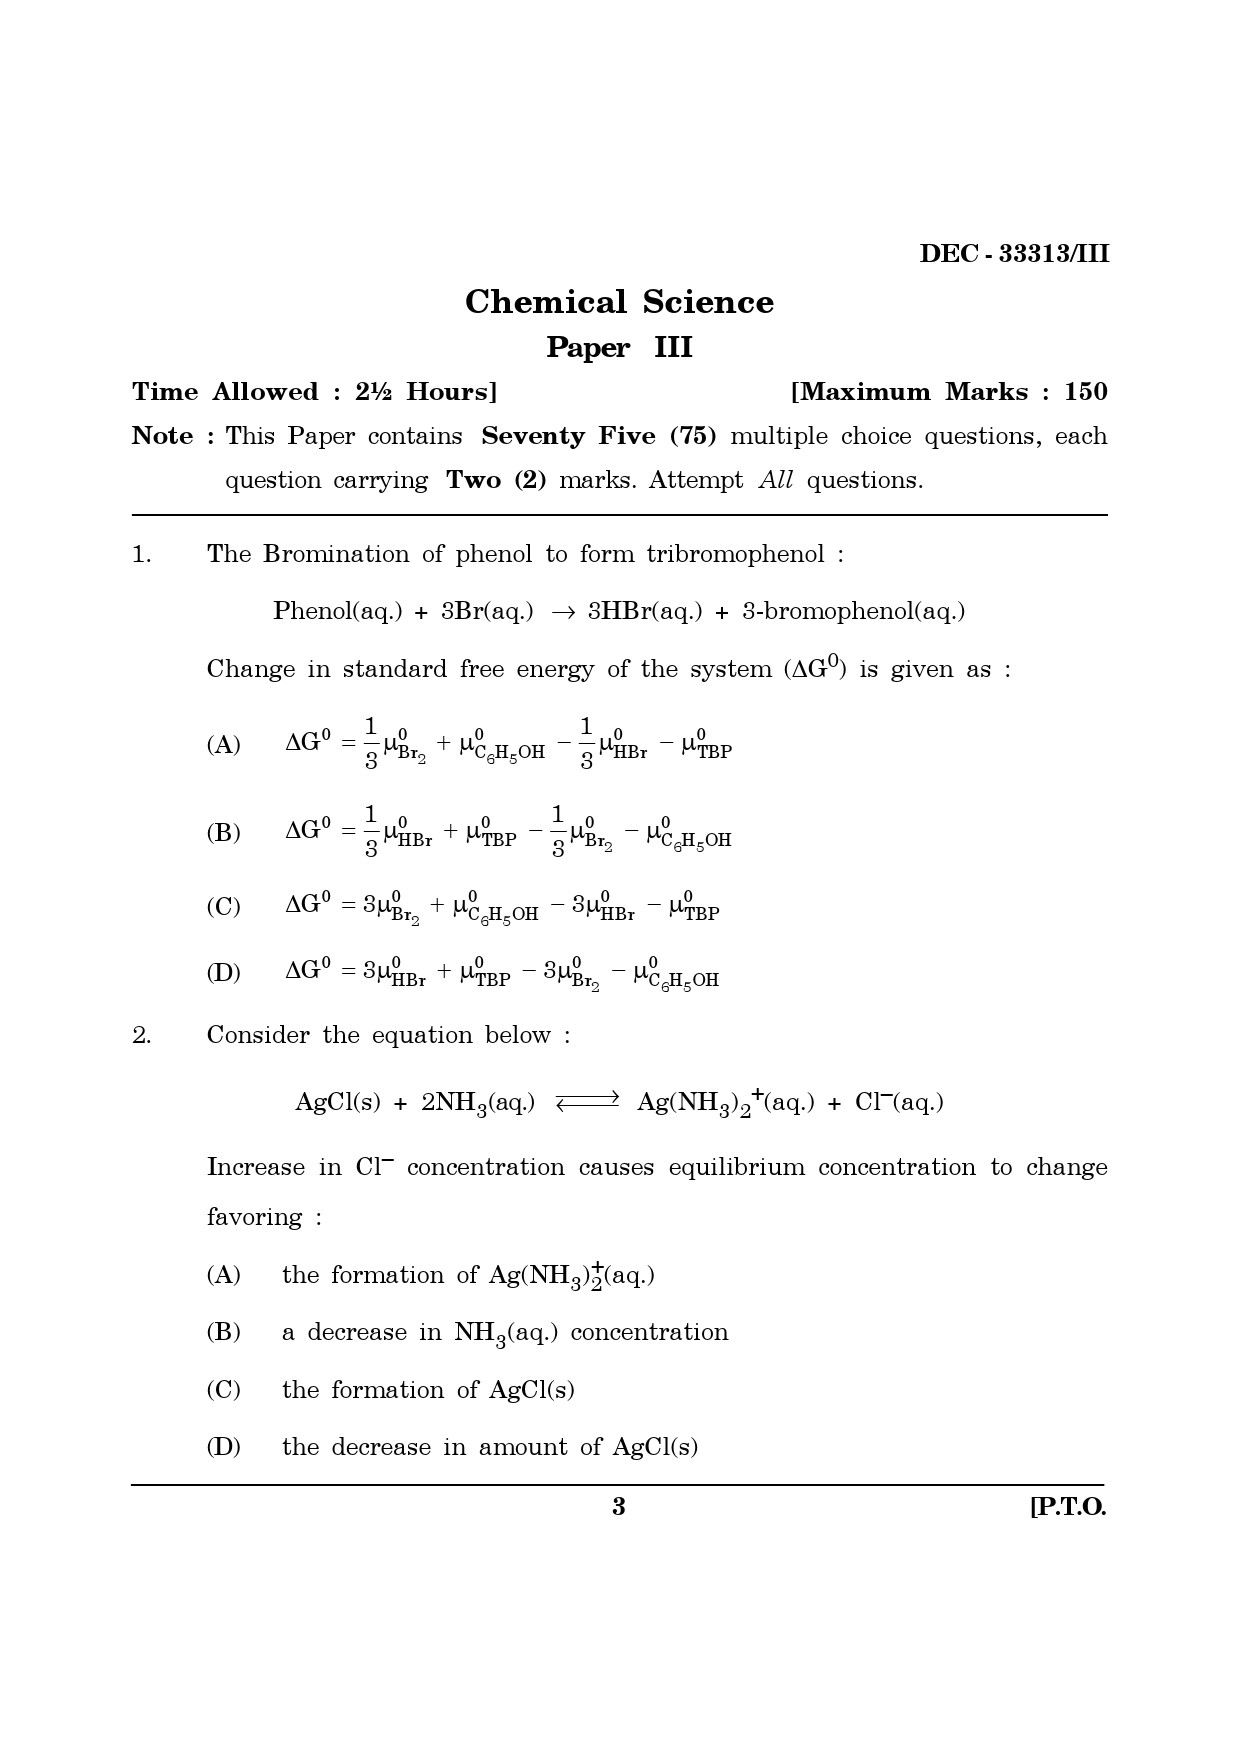 Maharashtra SET Chemical Sciences Question Paper III December 2013 2